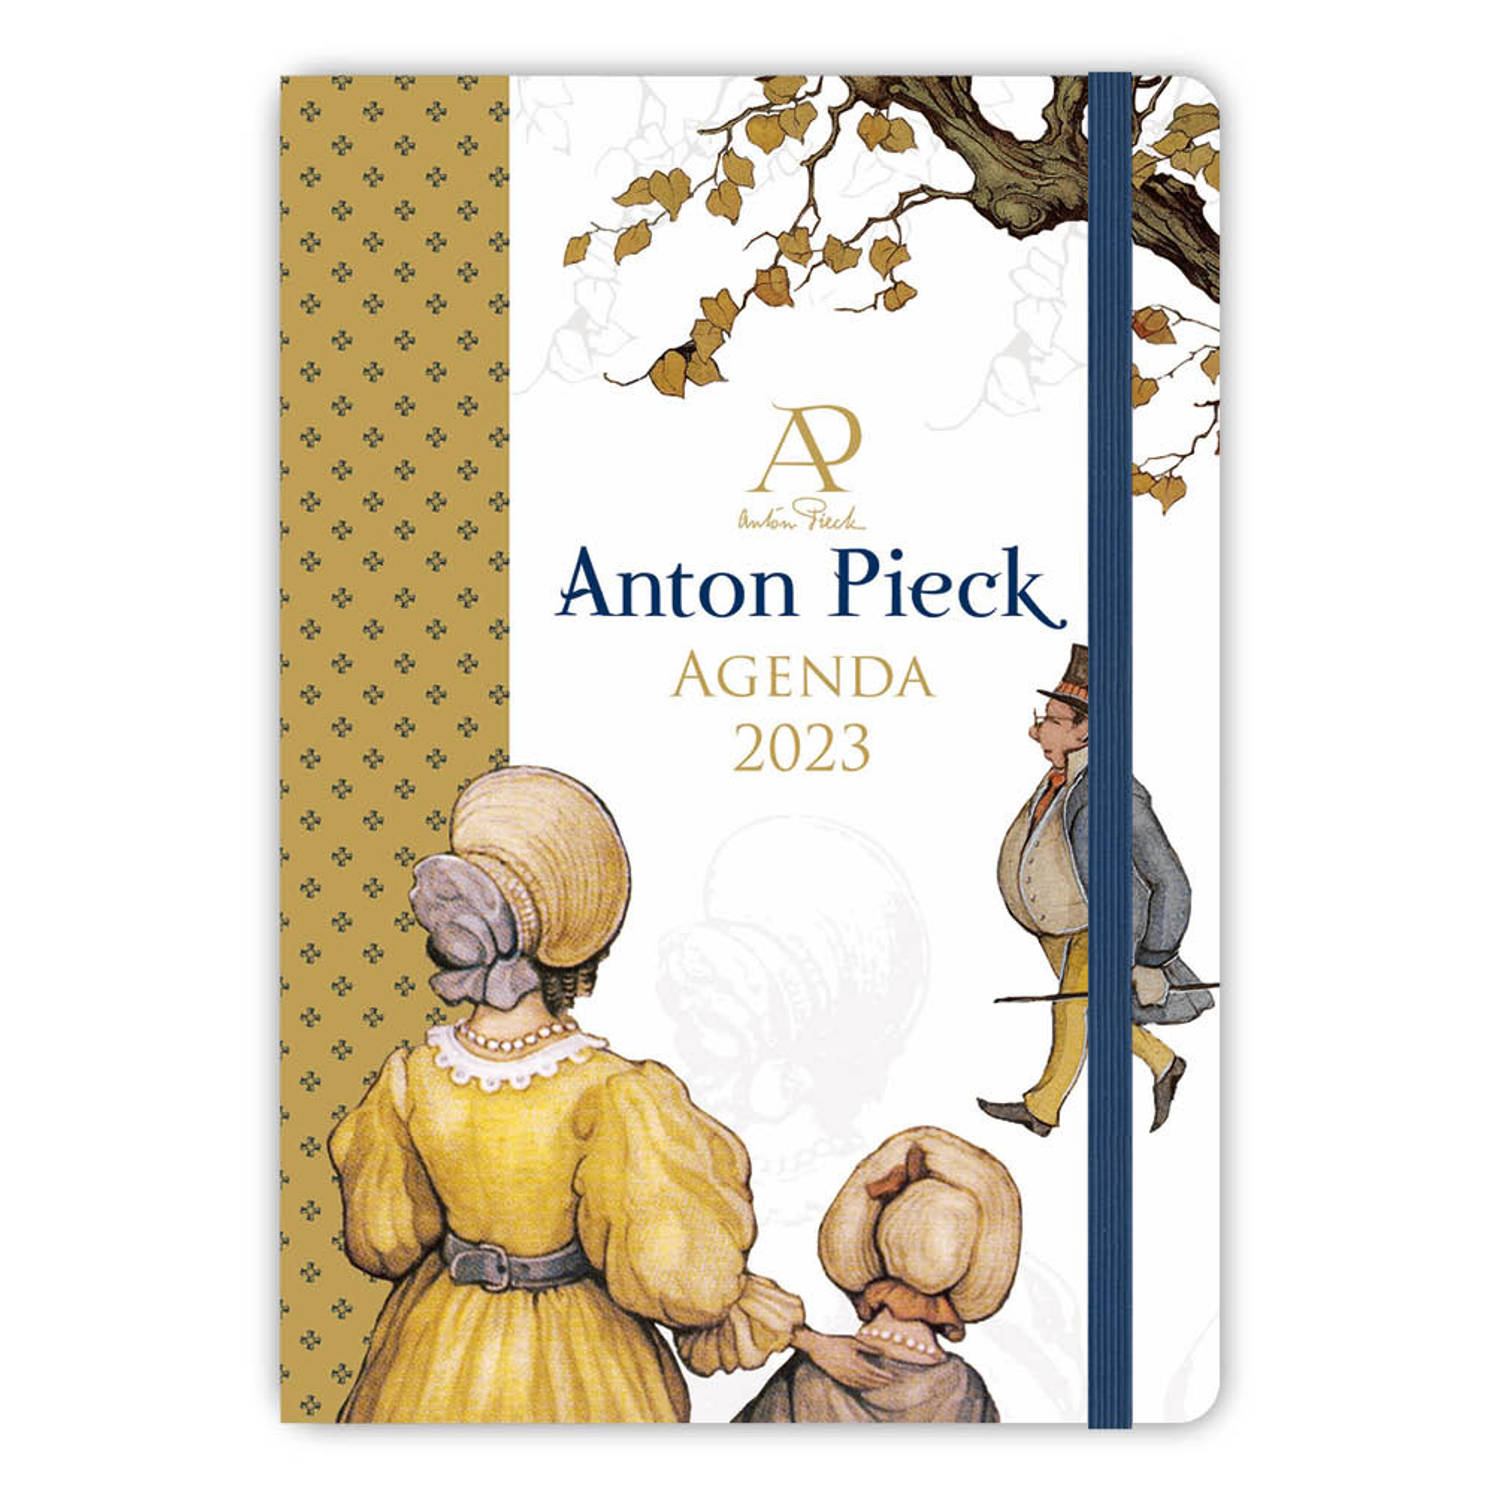 Anton Pieck weekagenda 2023 - in detail - elastische sluiting - 12,7x17,8 cm